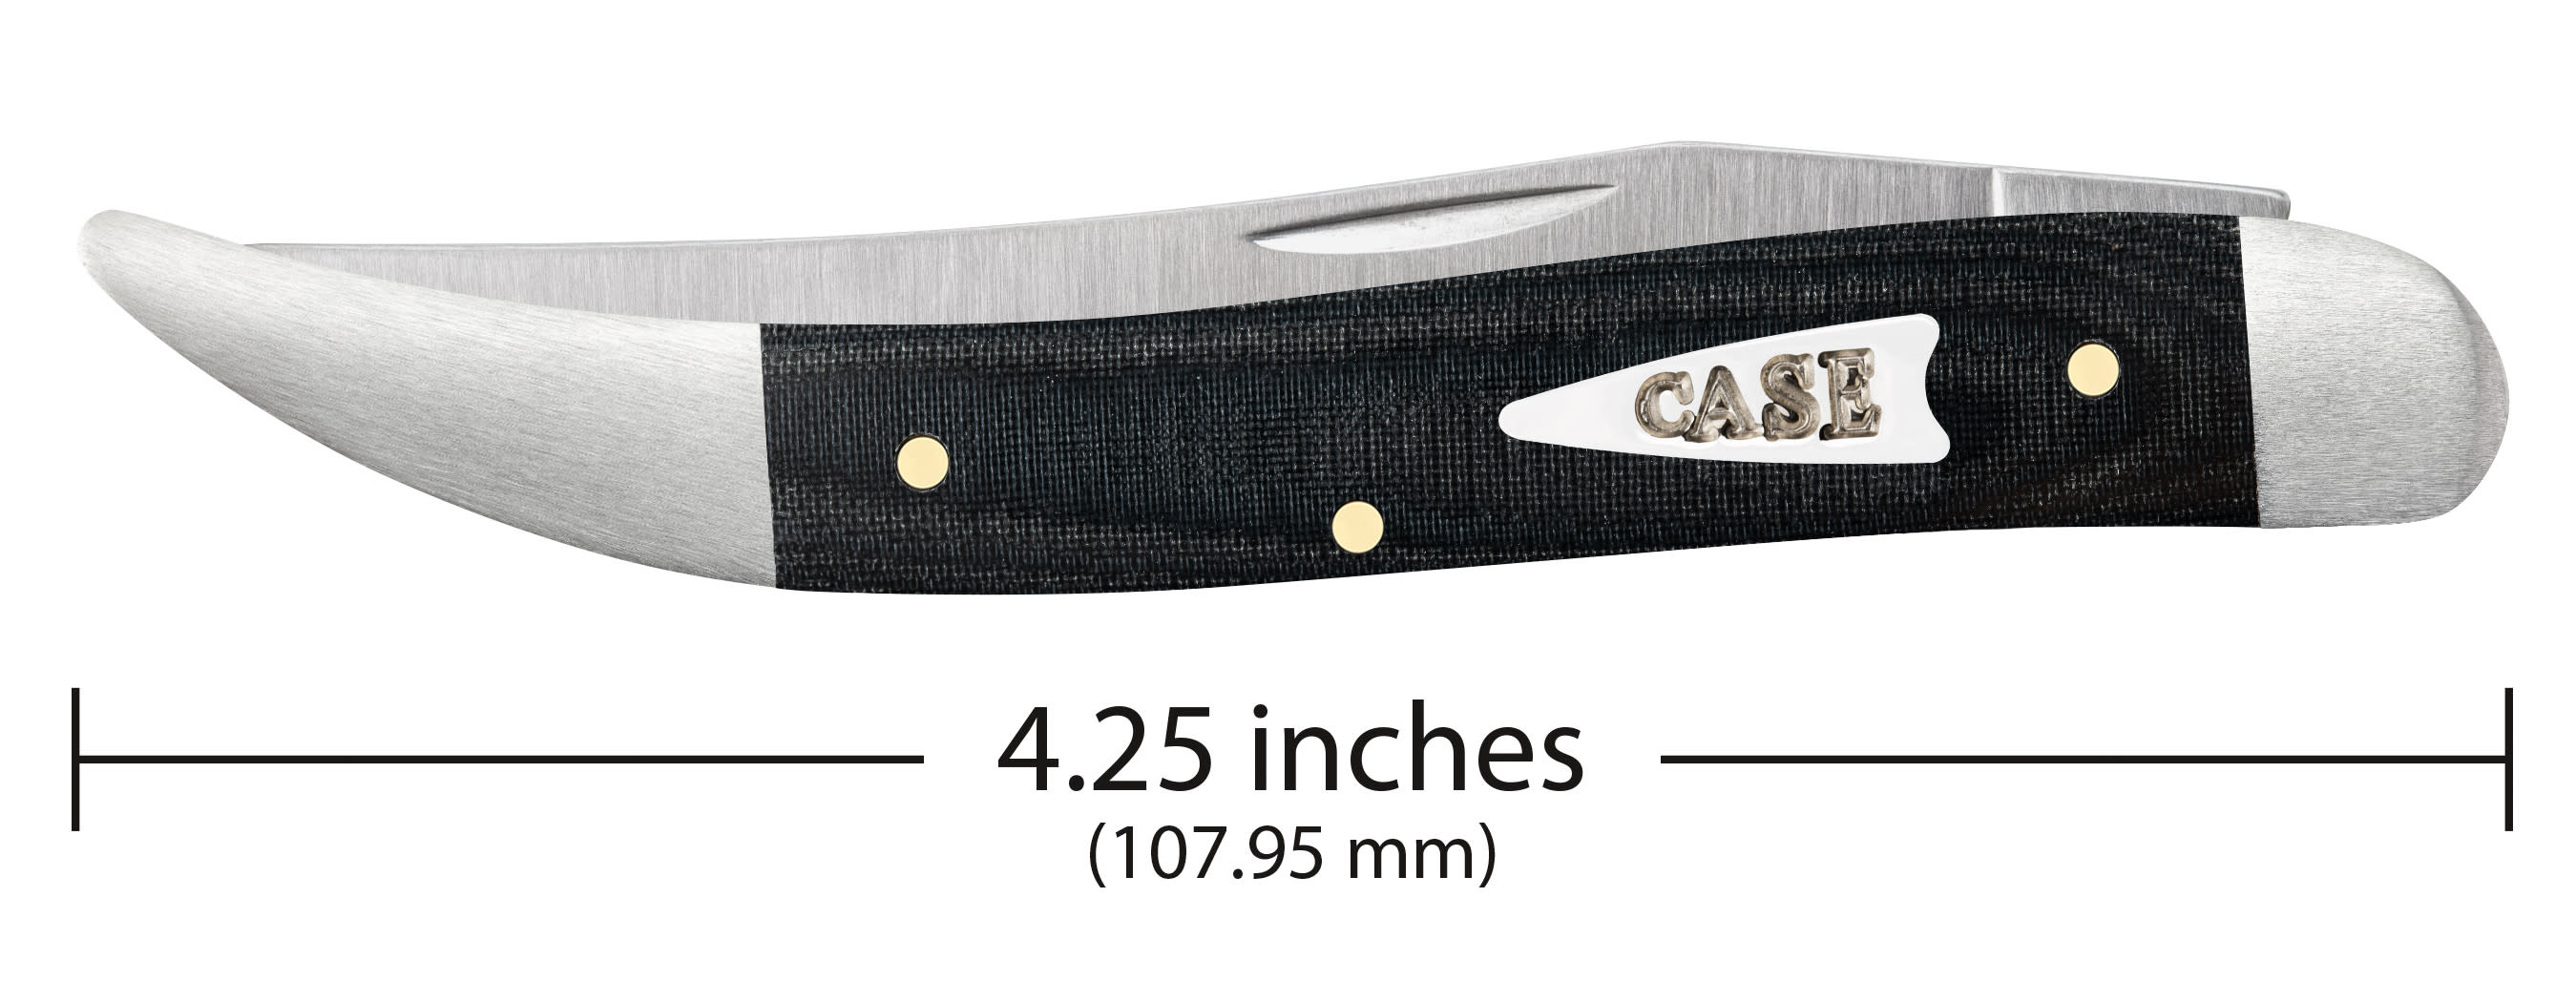 Smooth Black Micarta® Medium Texas Toothpick Knife Dimensions